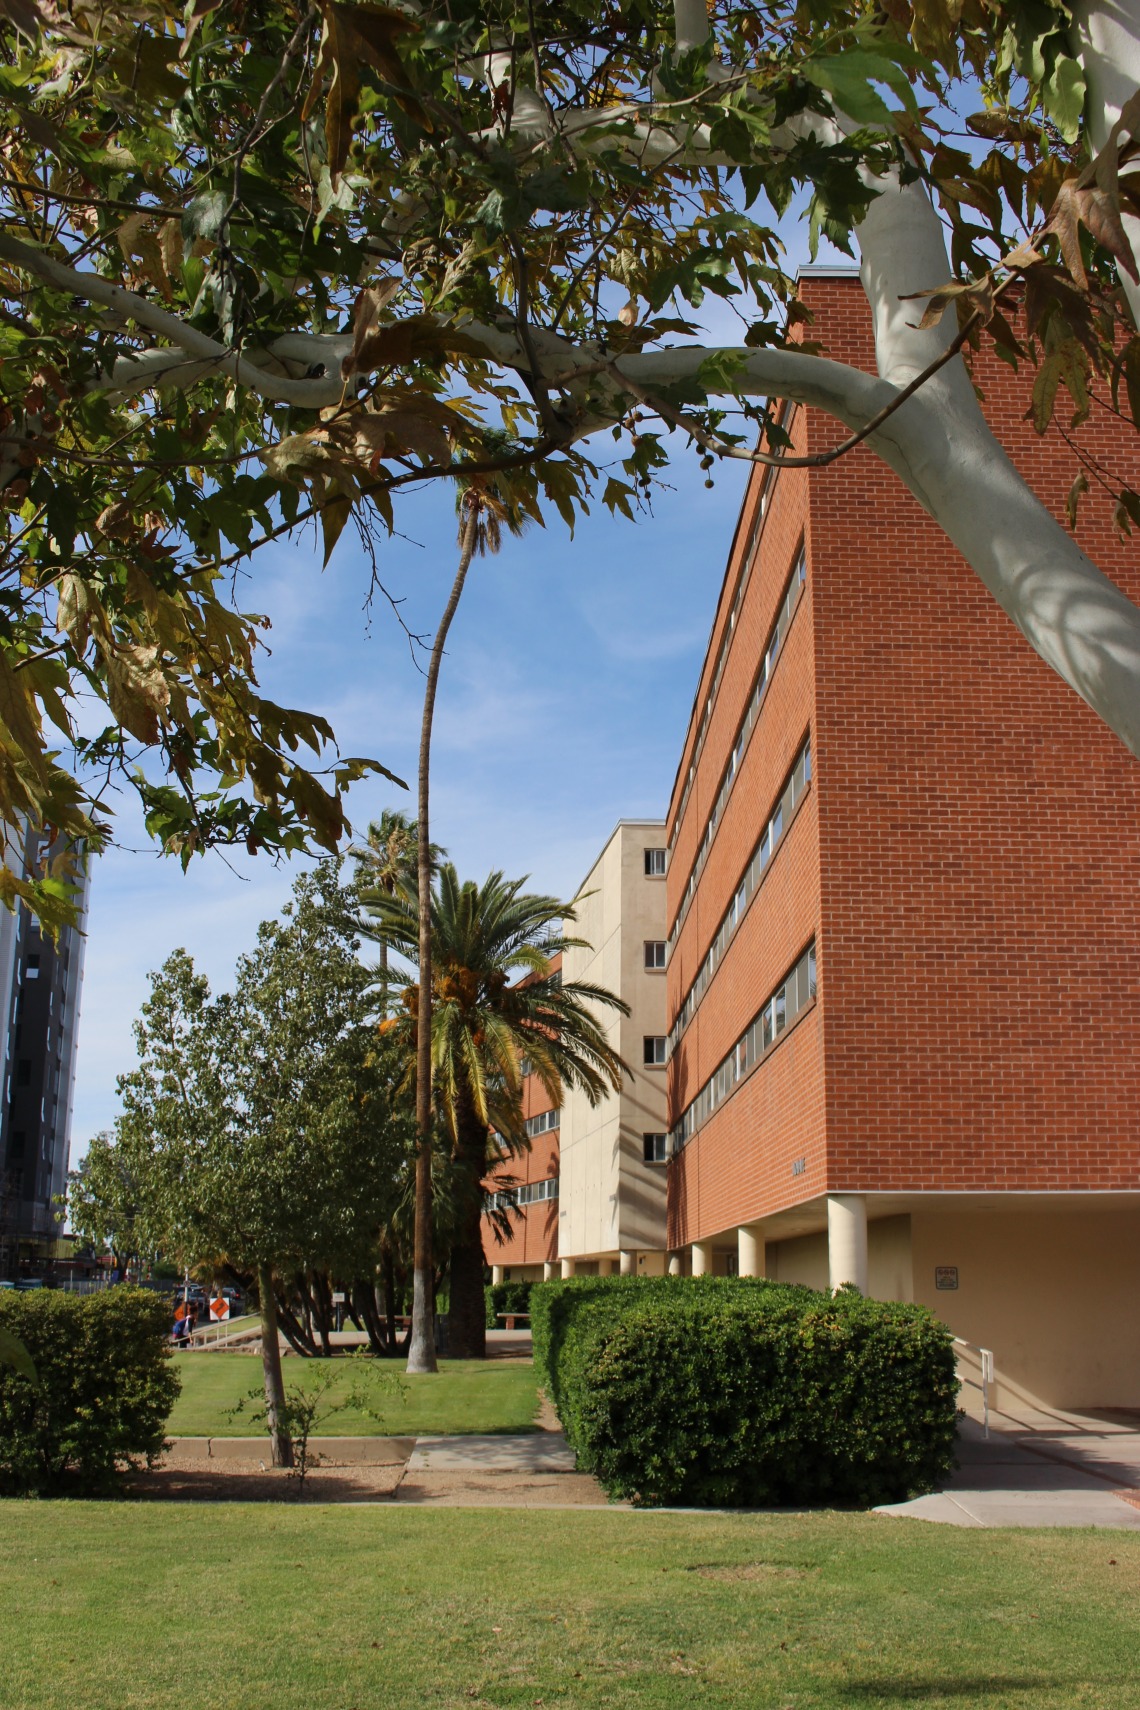 Manzanita Hall at Arizona State University, 2014-11-15